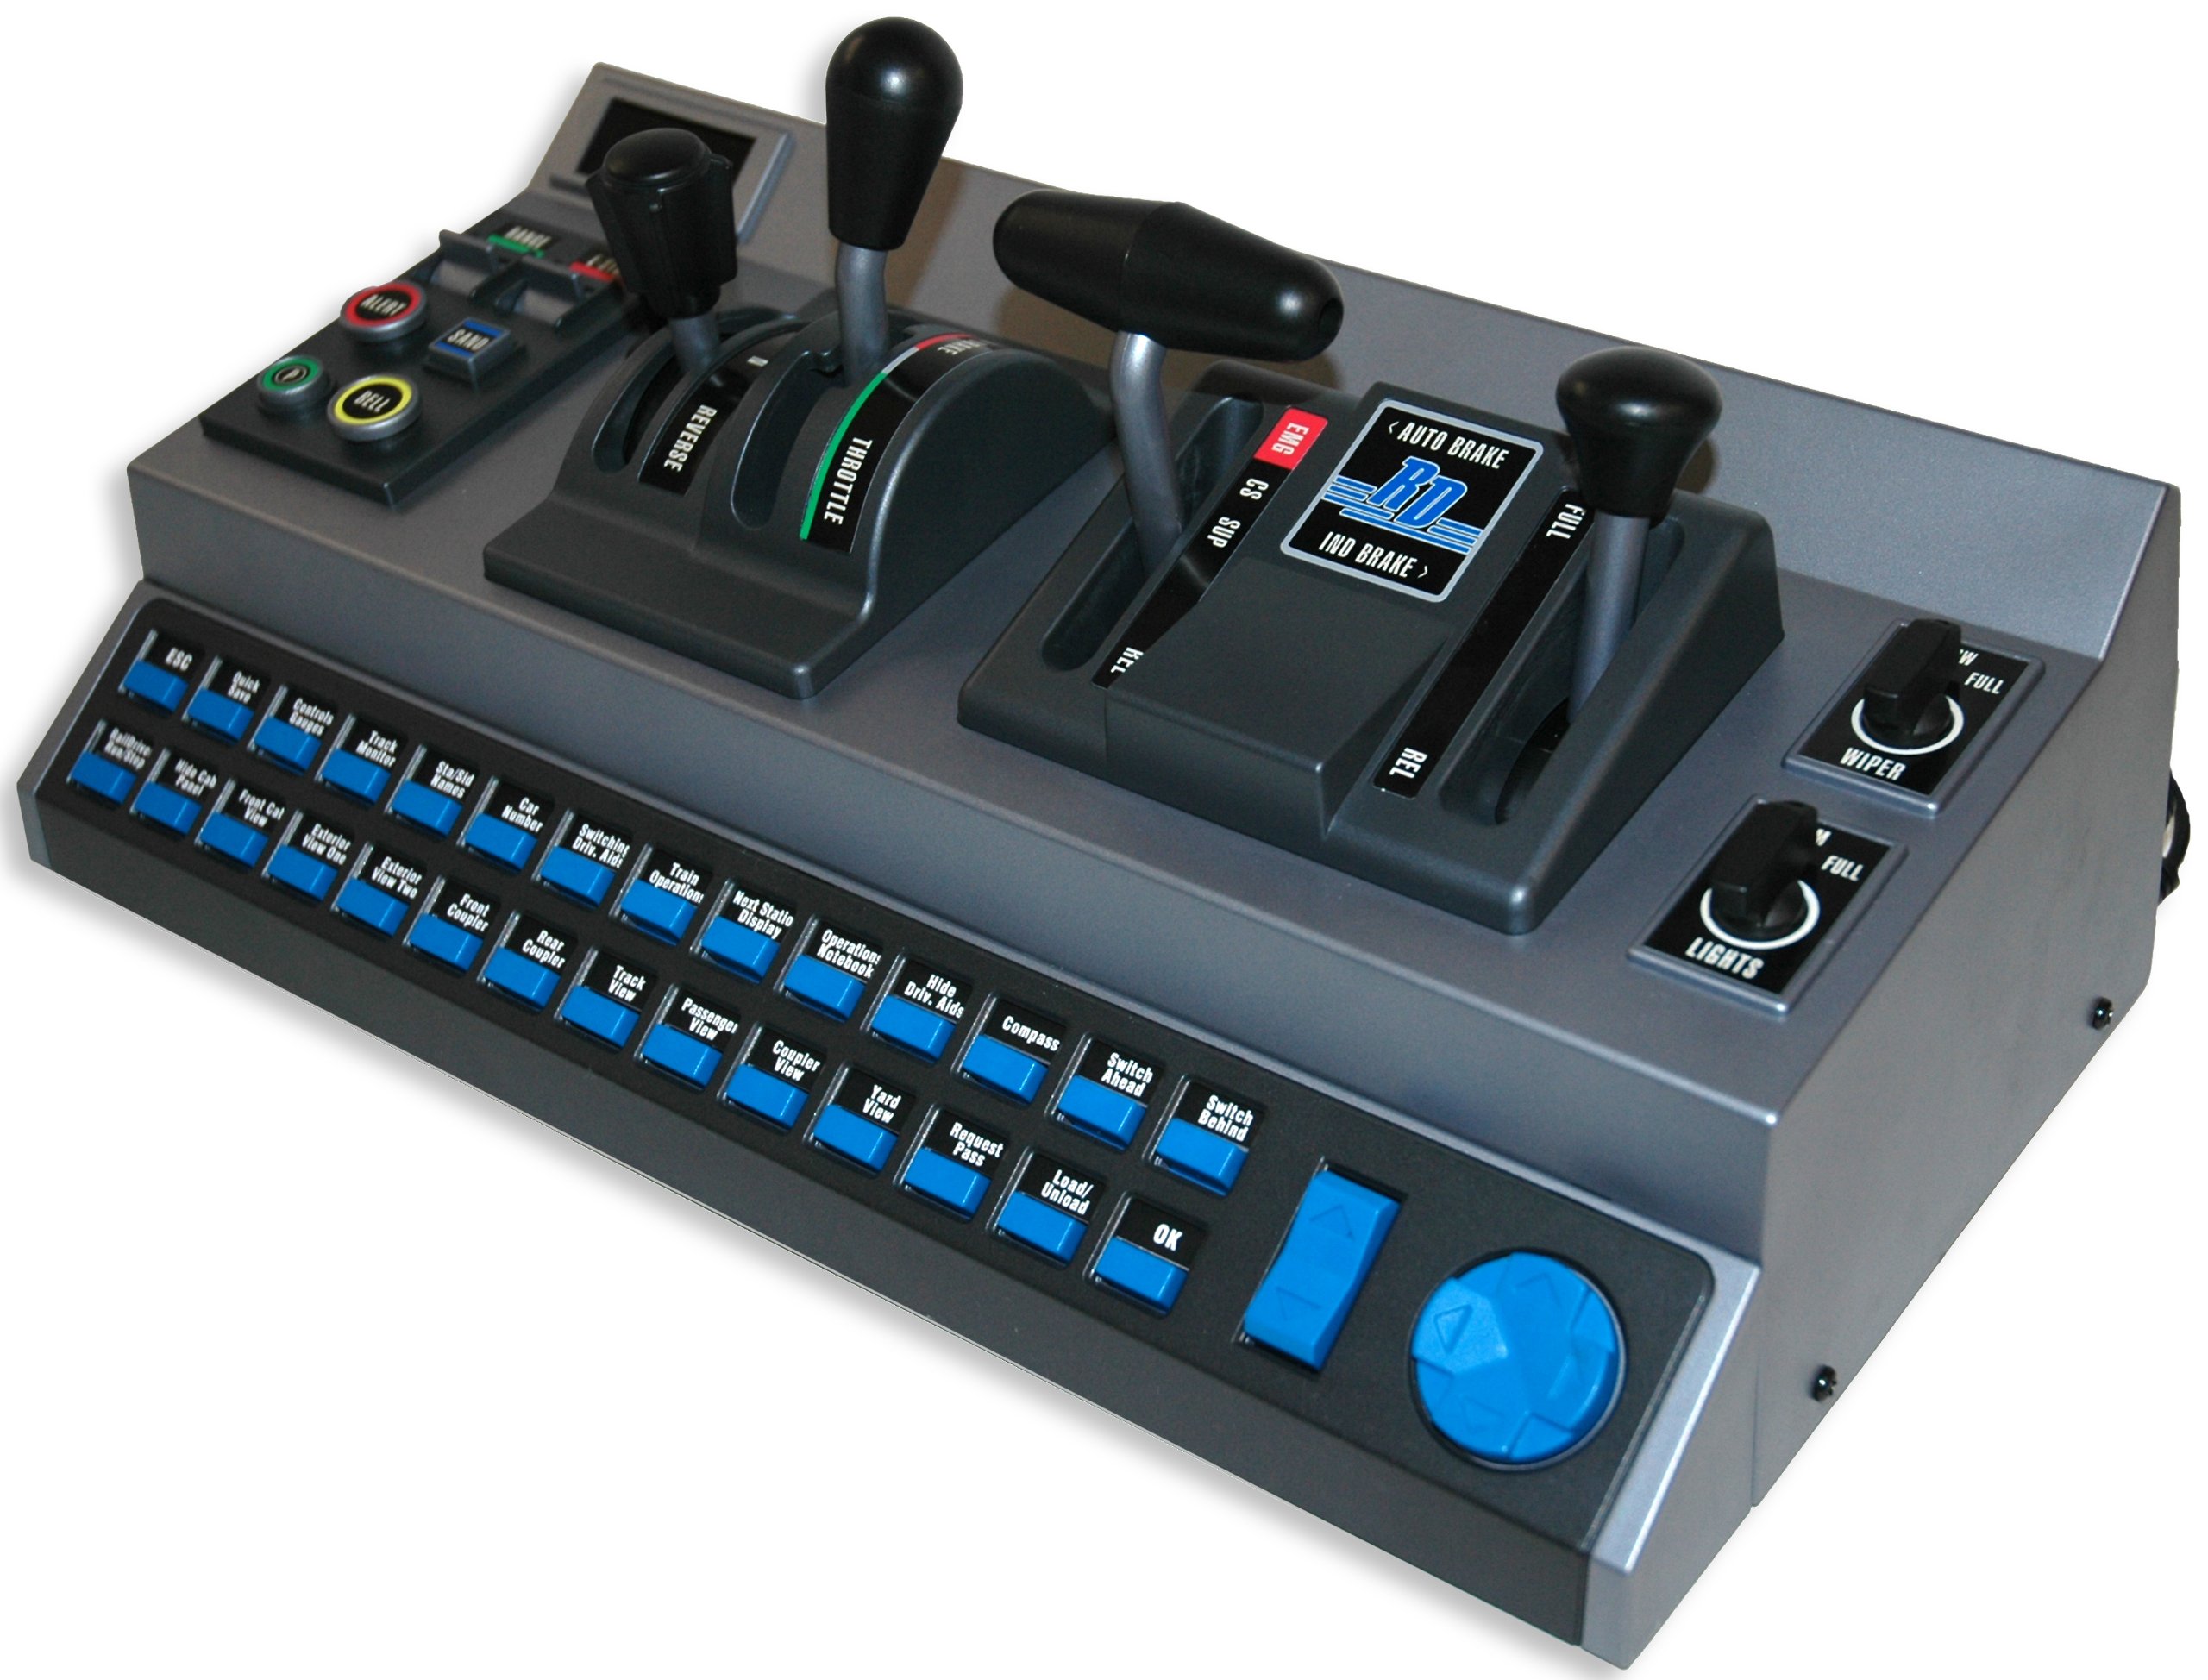 The RailDriver Controller